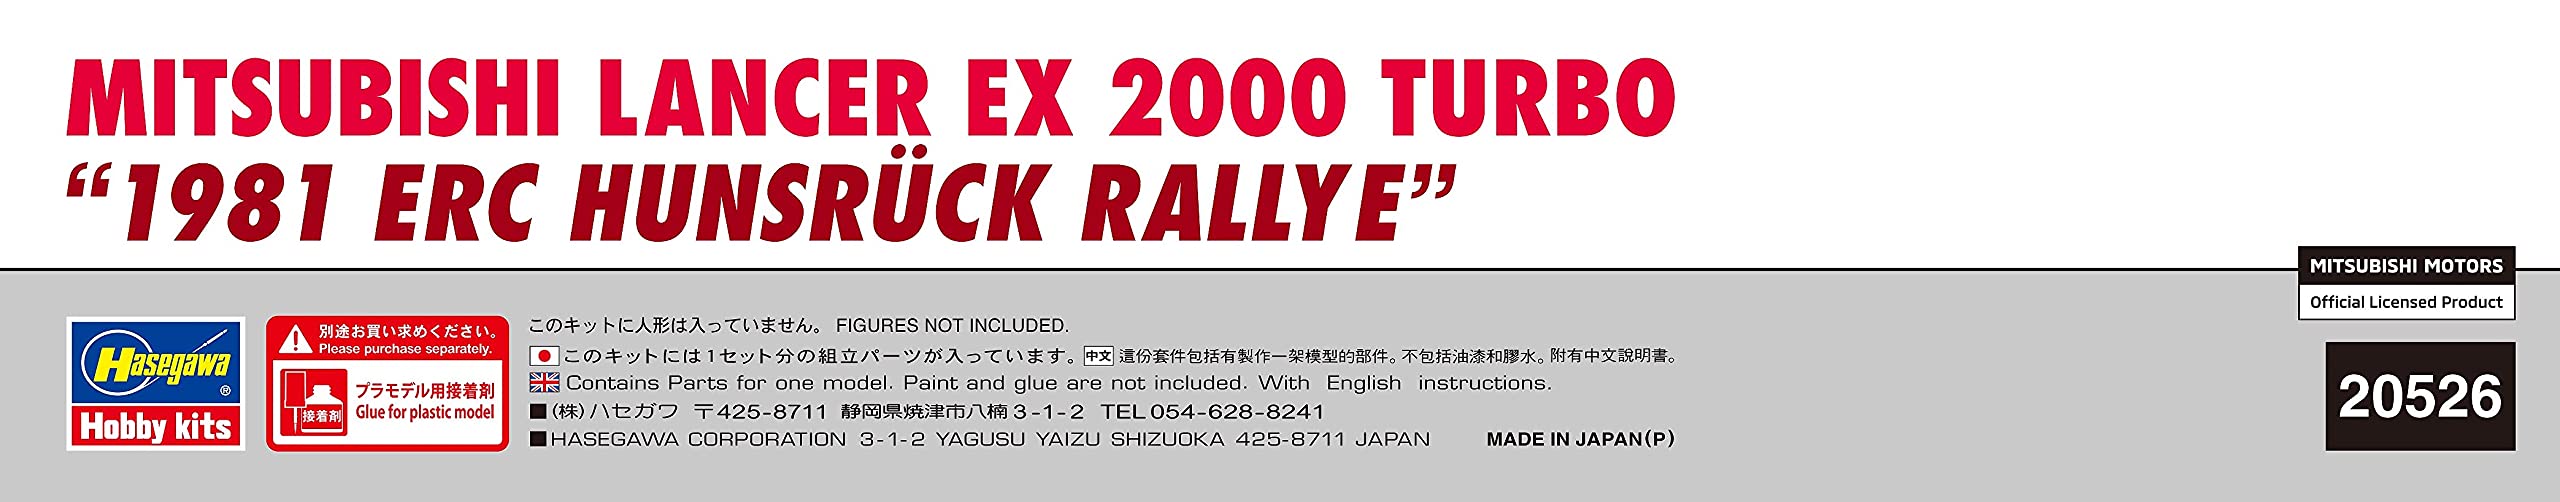 Hasegawa 1/24 Mitsubishi Lancer Ex 2000 Turbo 1981 Erc Hunsruck Rally Plastic Model 20526